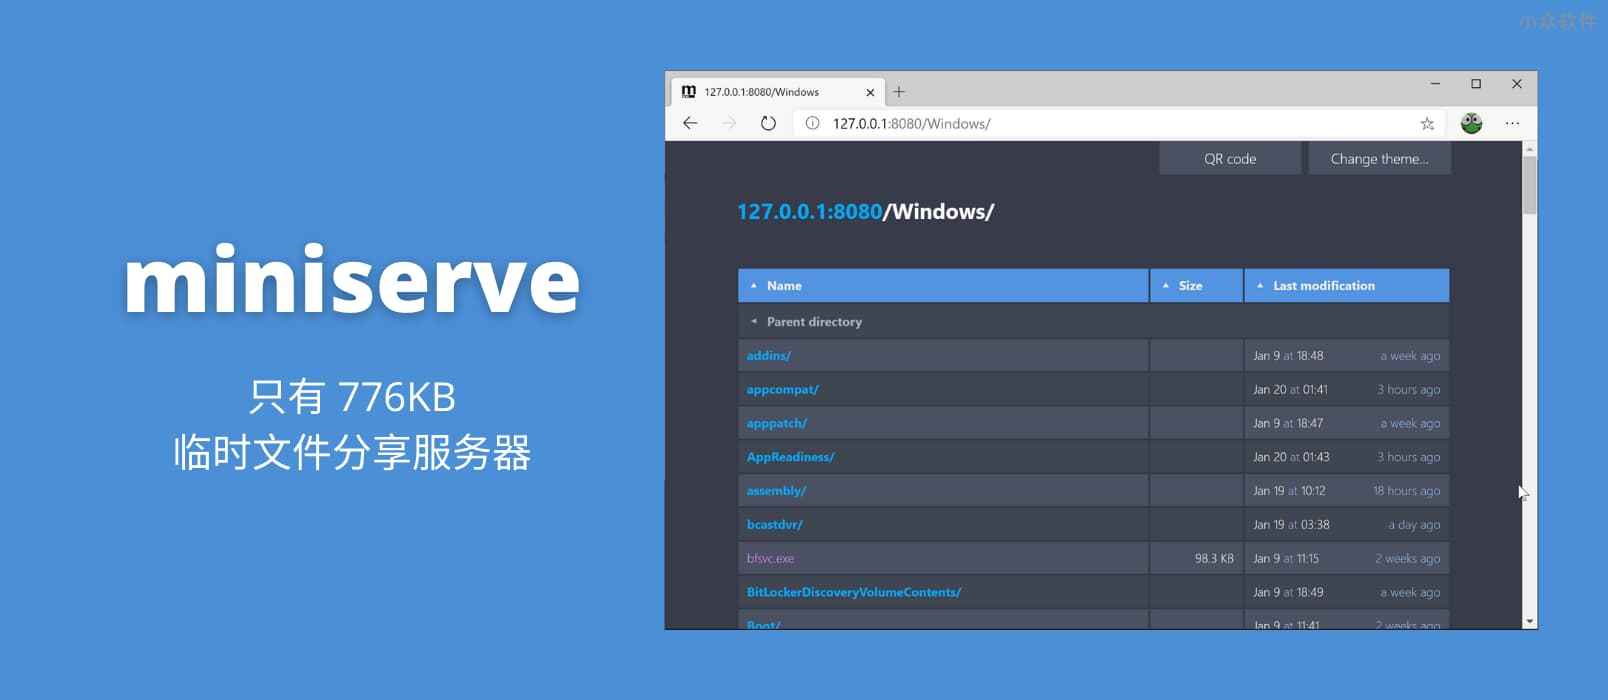 miniserve – 只有 776KB 的临时文件分享服务器[Win/Linux/macOS]